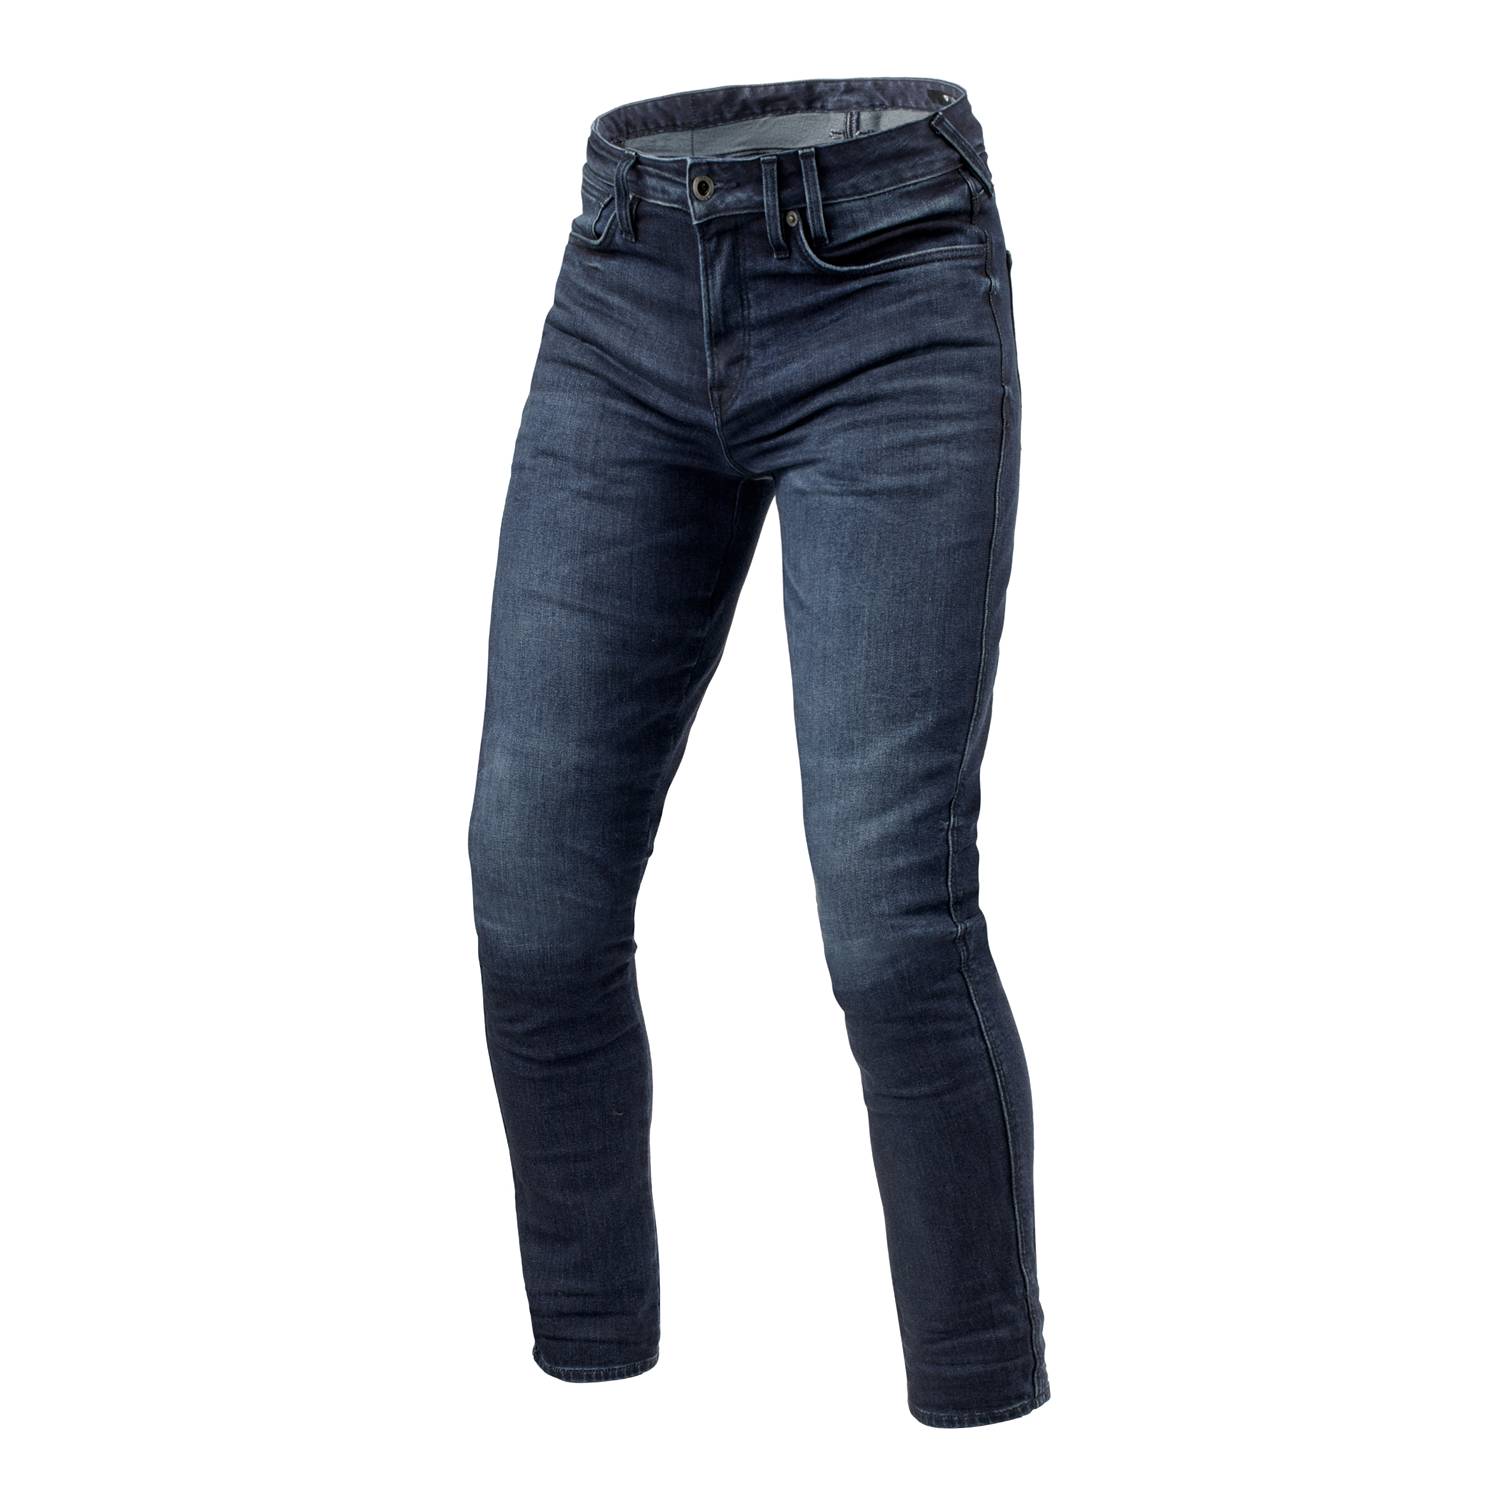 Image of REV'IT! Jeans Carlin SK Dark Blue Used L36 Motorcycle Jeans Talla L36/W33